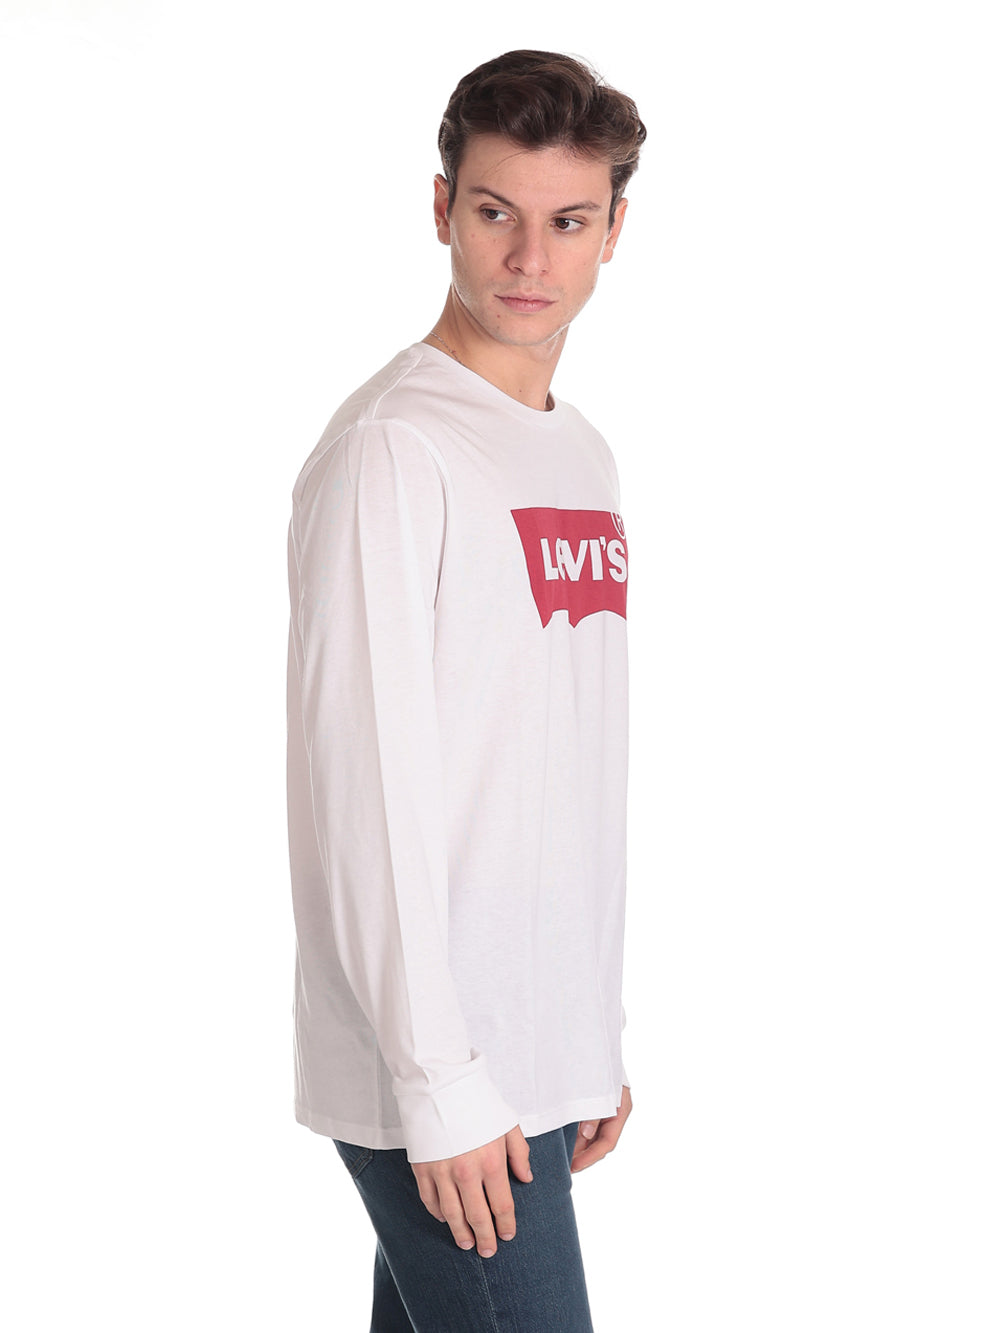 Levi's T-Shirt 36015-0010 Nero